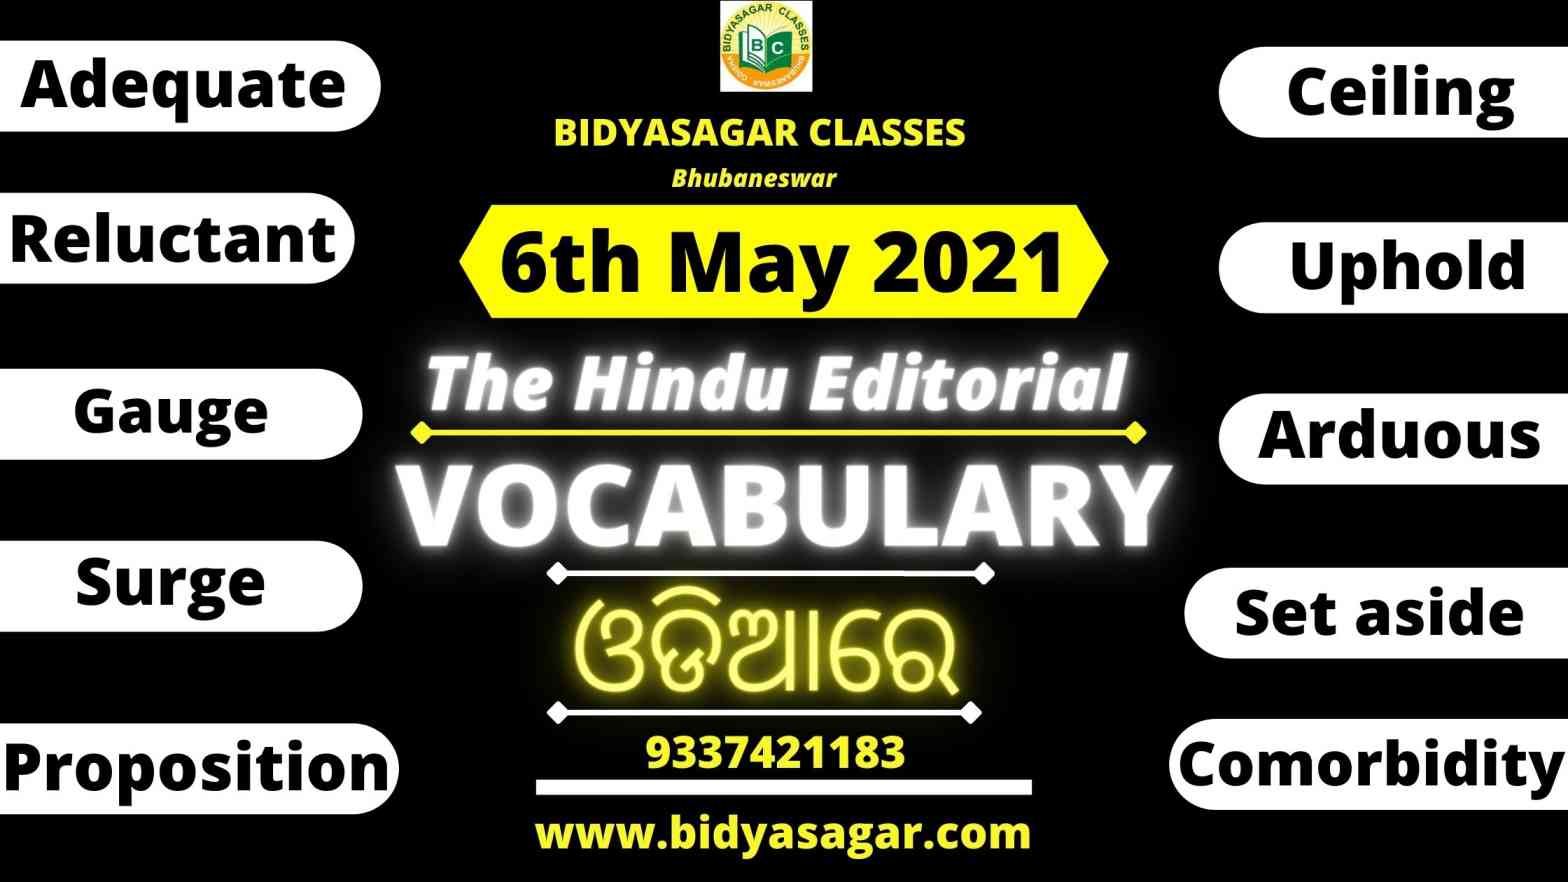 The Hindu Editorial Vocabulary of 6th May 2021